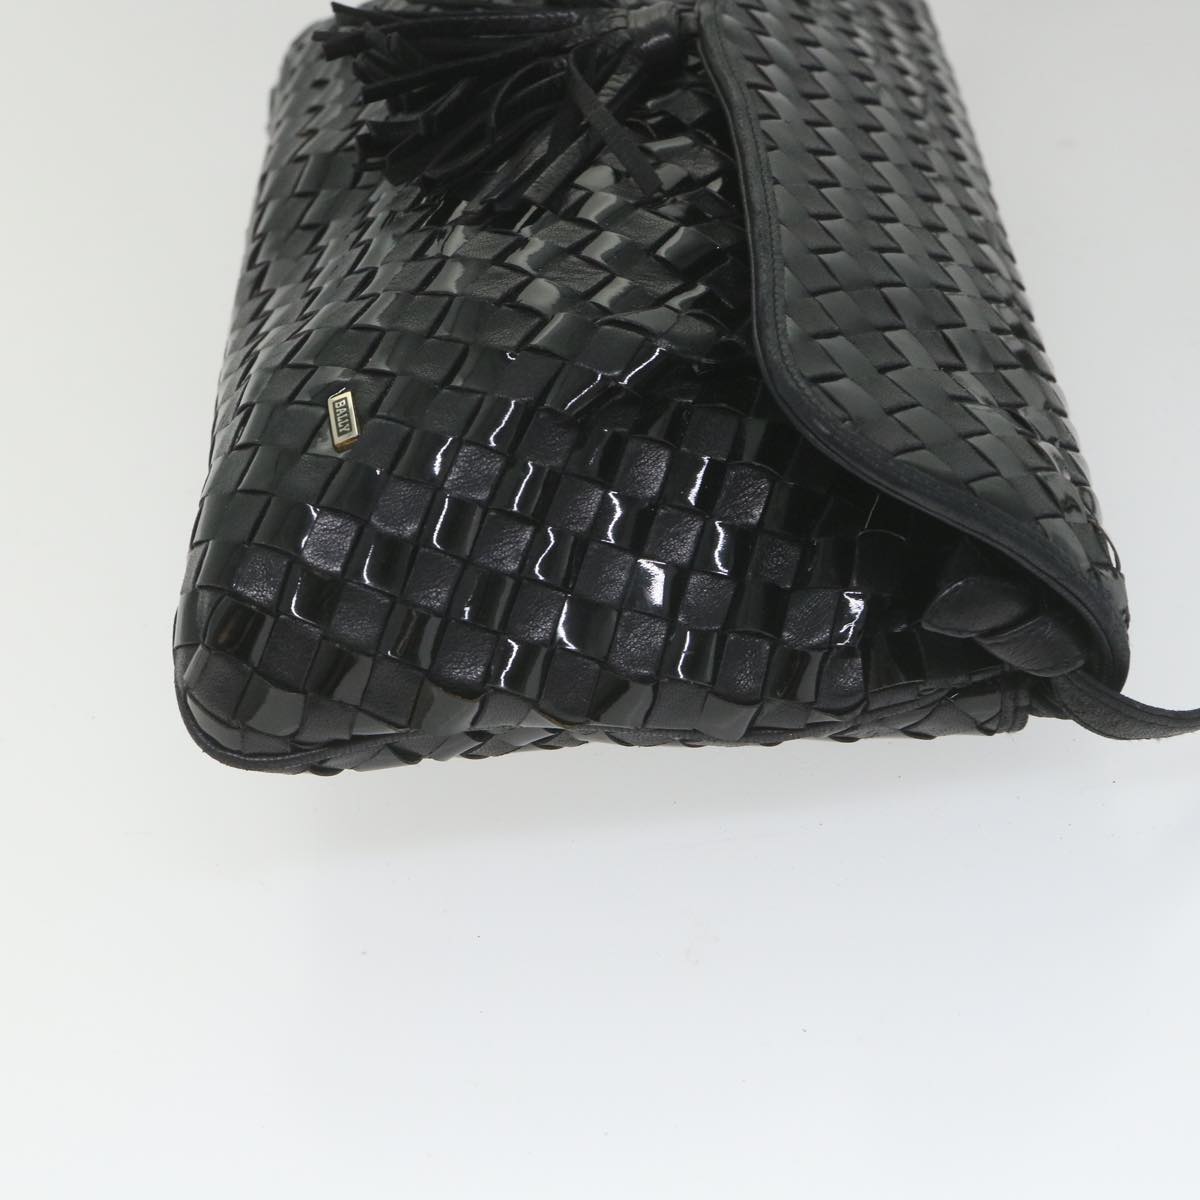 BALLY Shoulder Bag Leather Black Auth bs9690